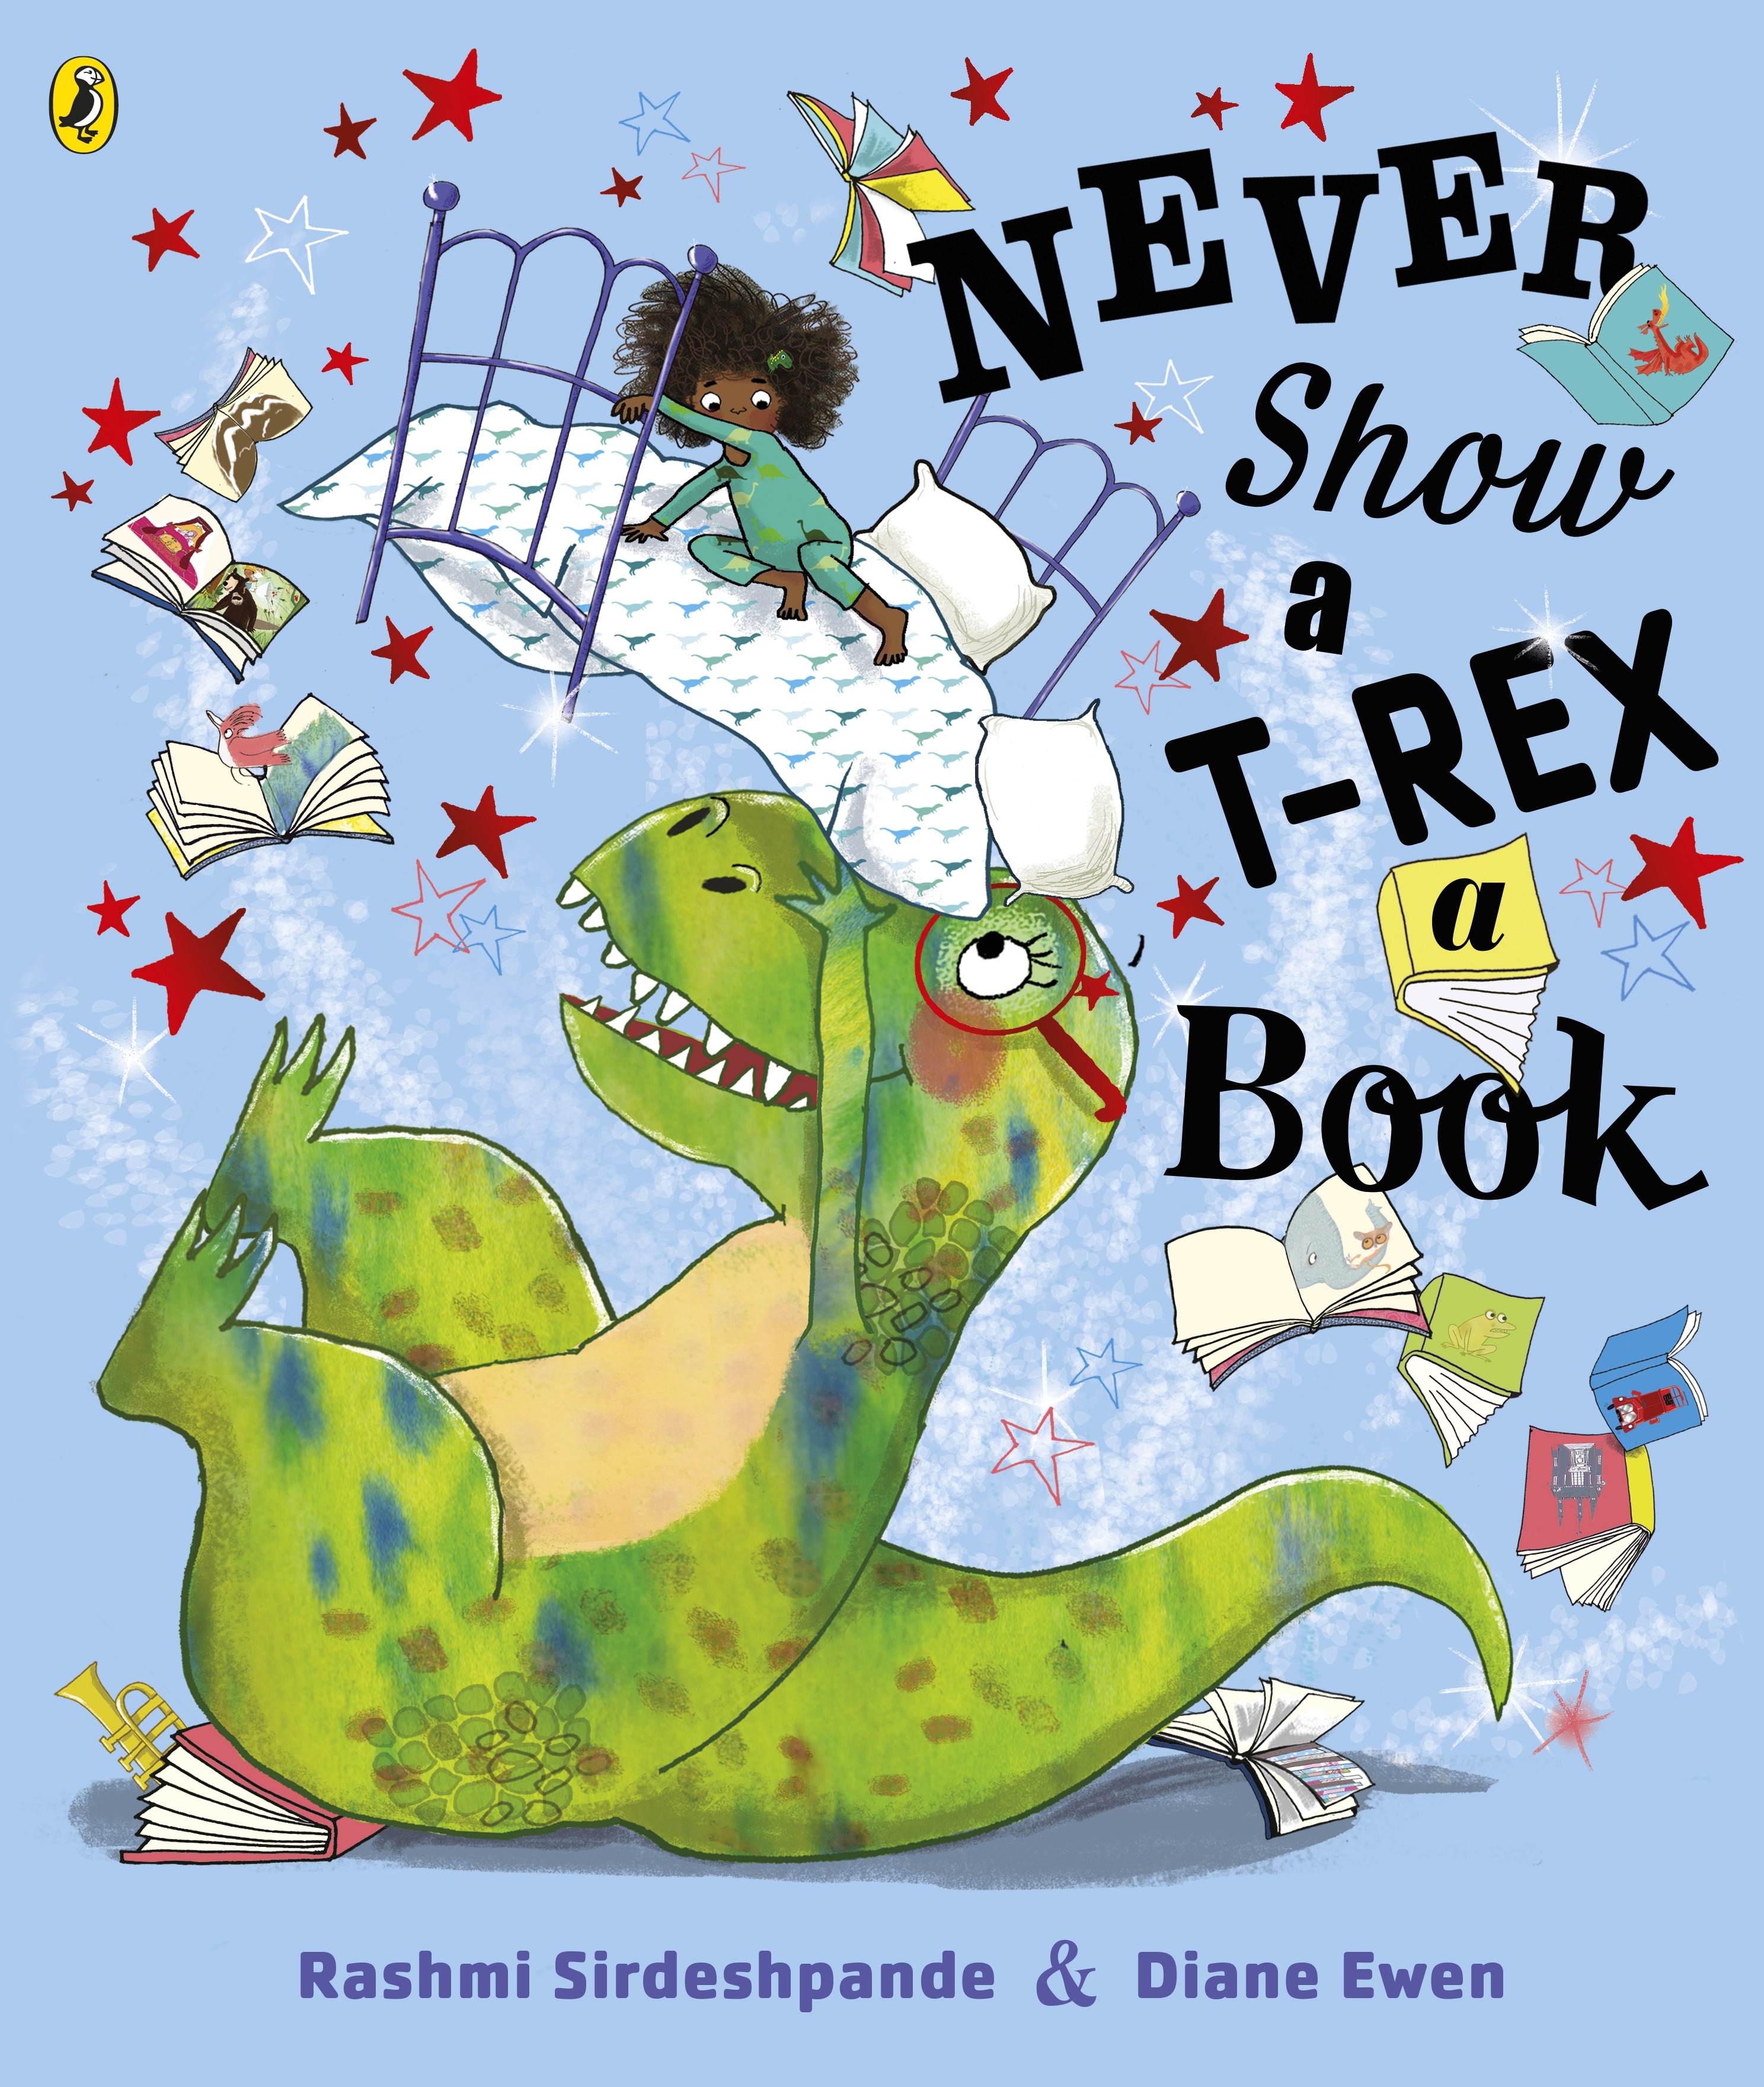 Book “Never Show A T-Rex A Book!” by Rashmi Sirdeshpande, Diane Ewen — August 6, 2020